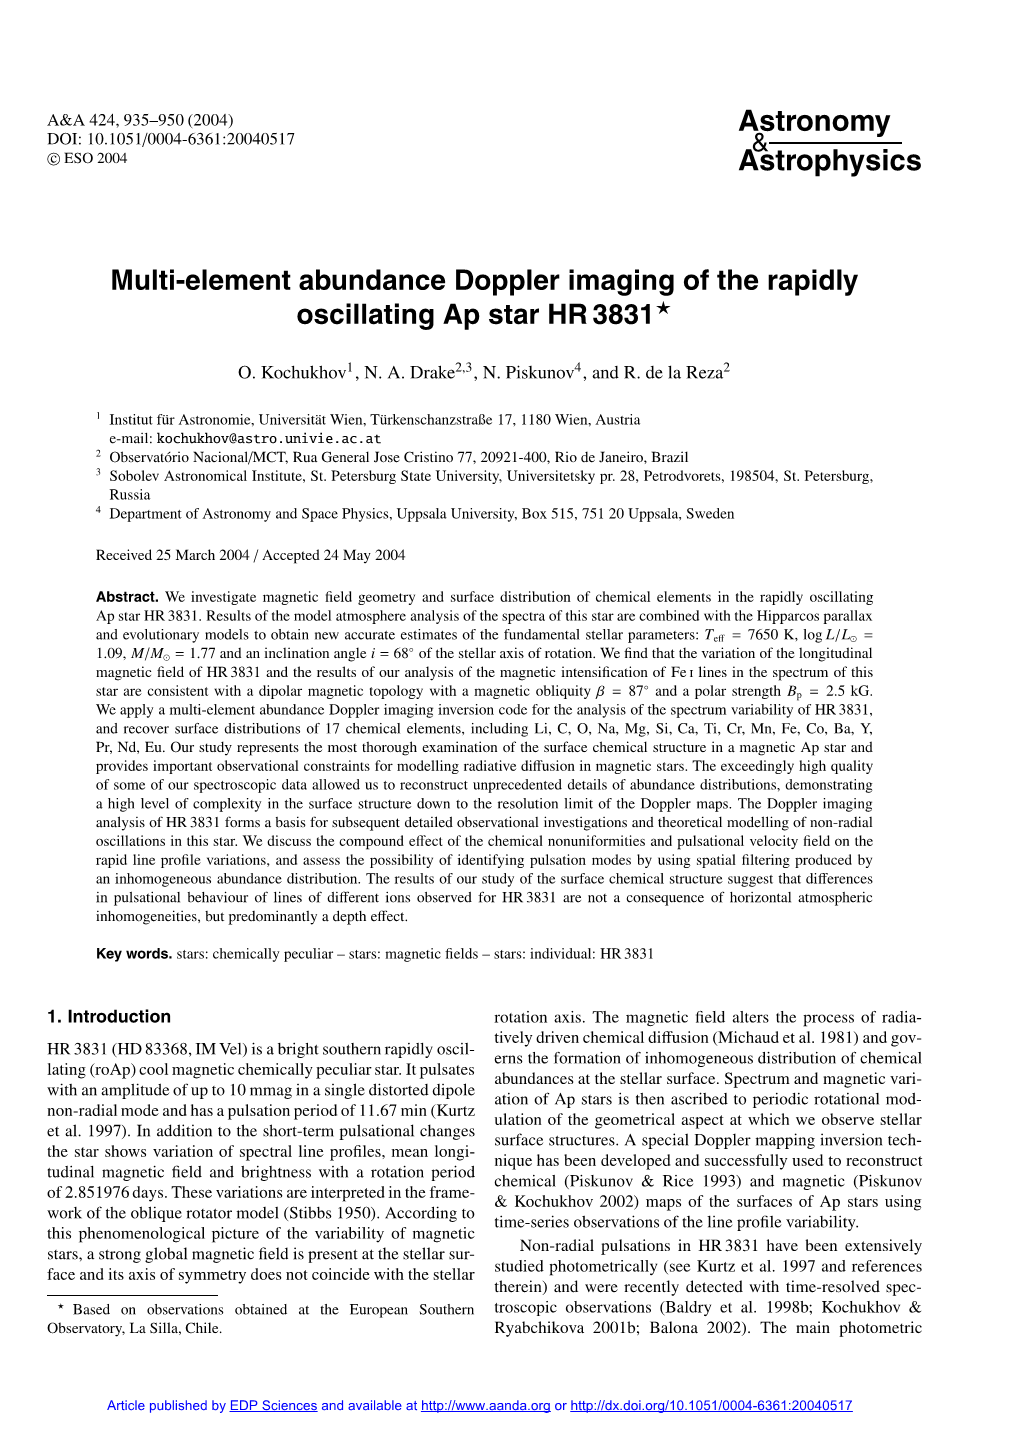 Multi-Element Abundance Doppler Imaging of the Rapidly Oscillating Ap Star HR 3831